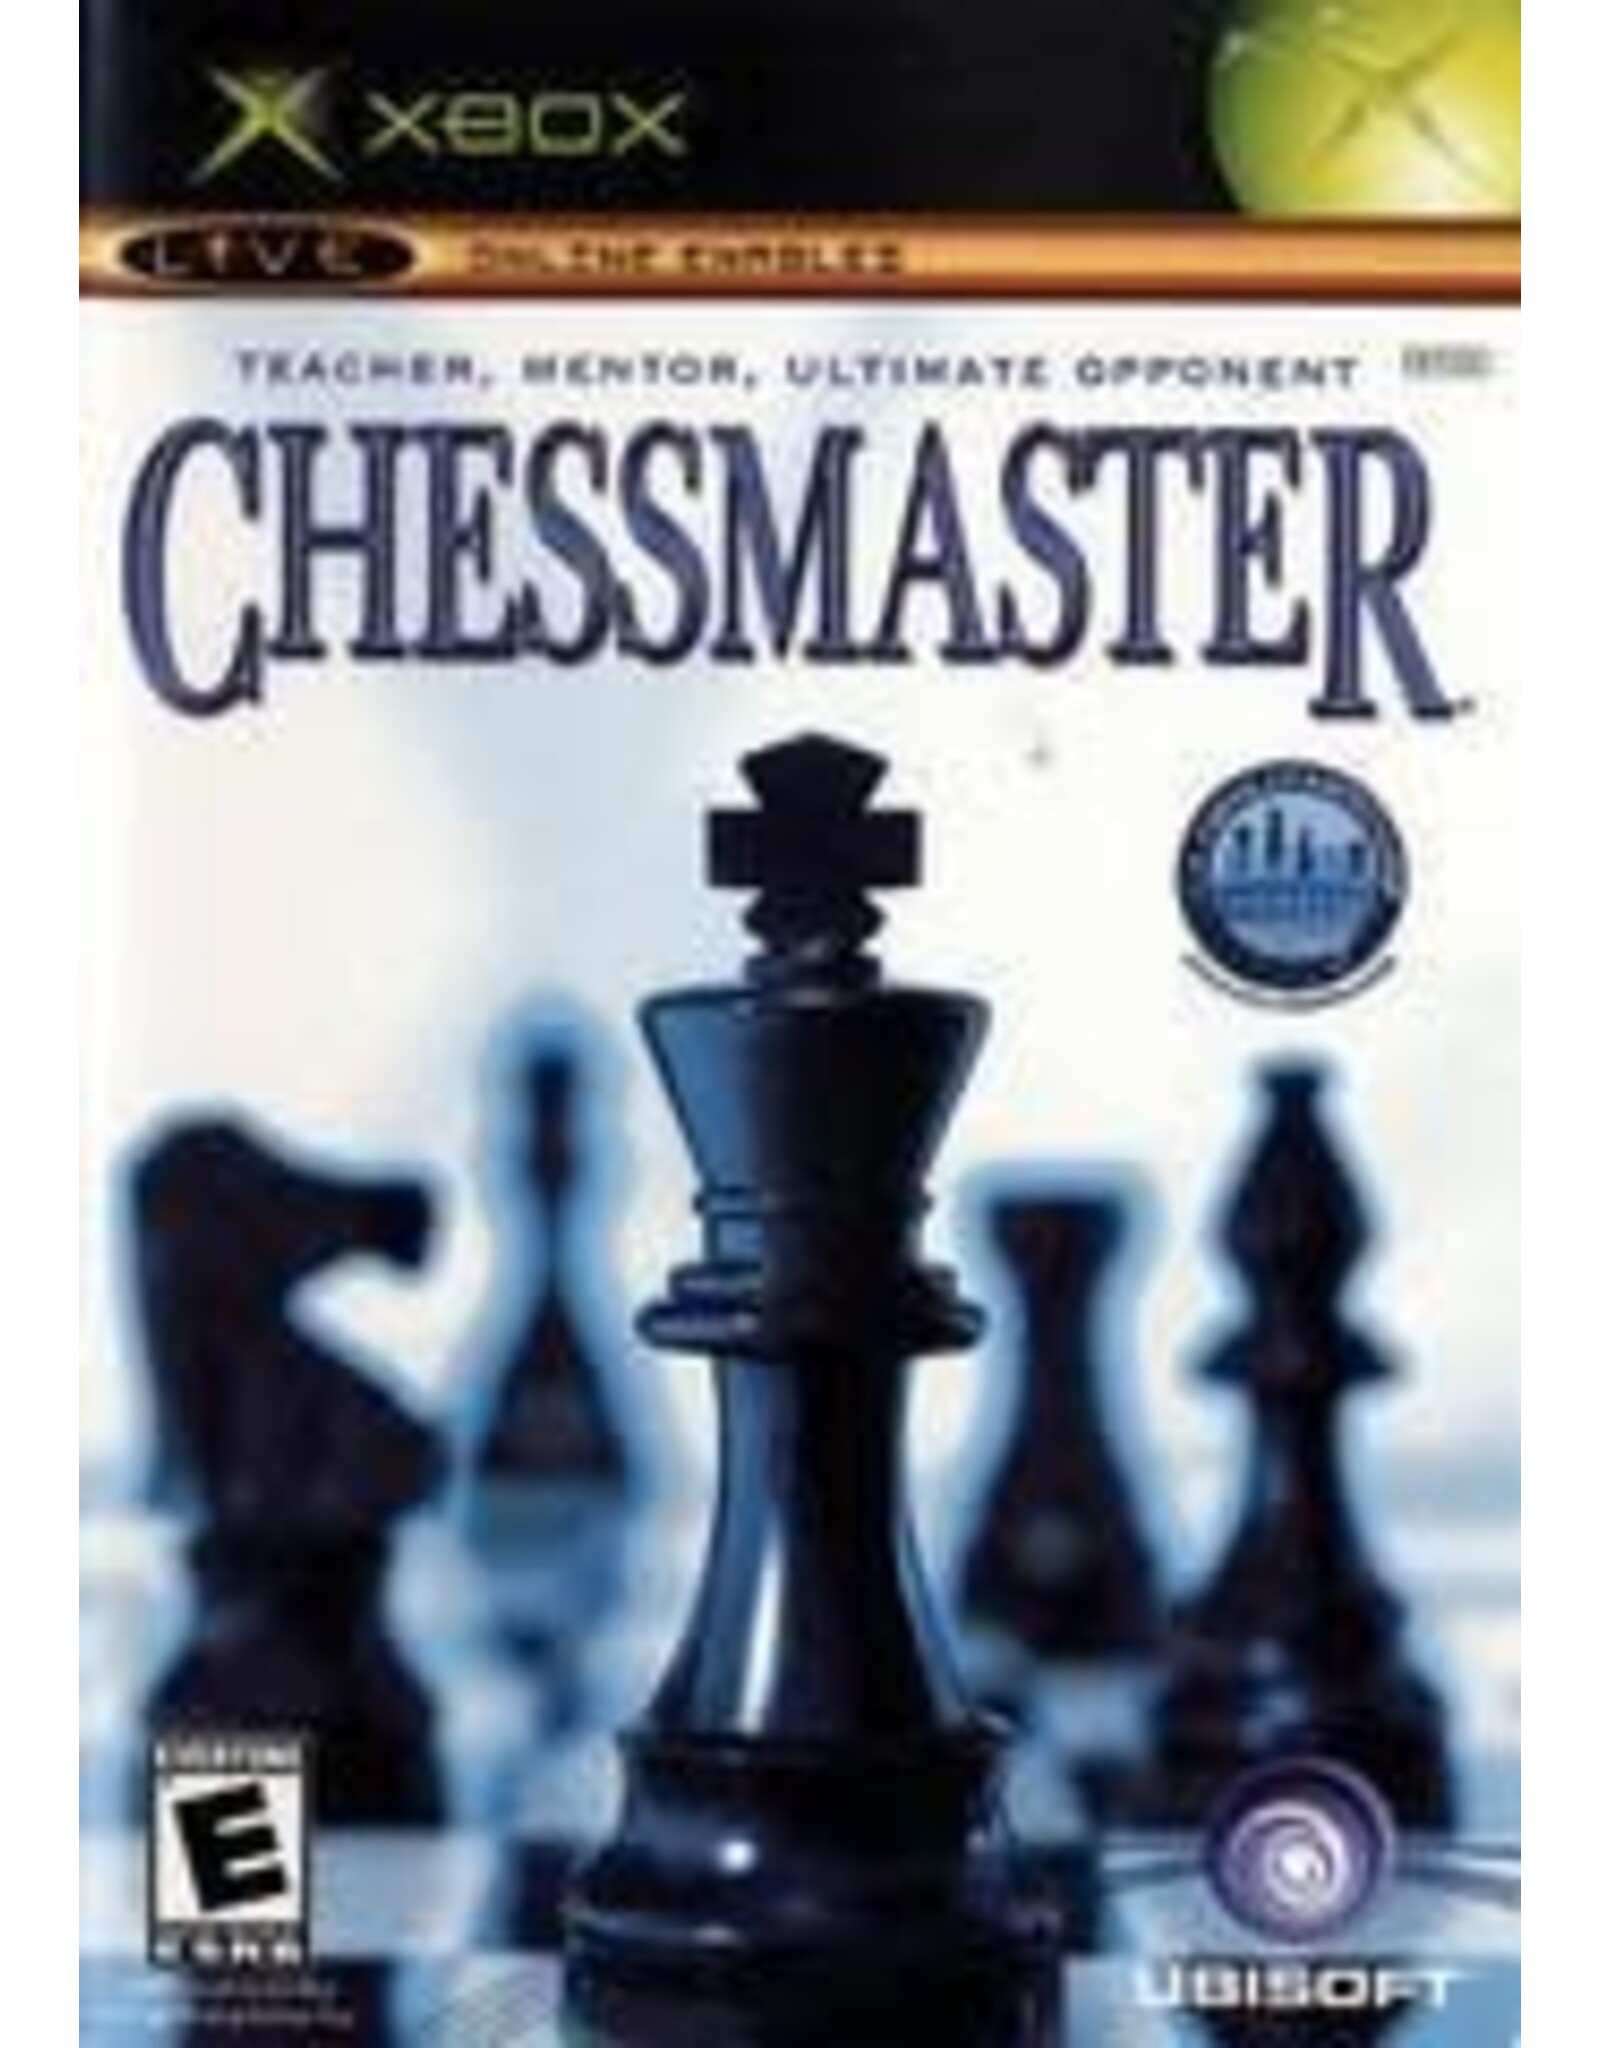 Xbox Chessmaster (No Manual)